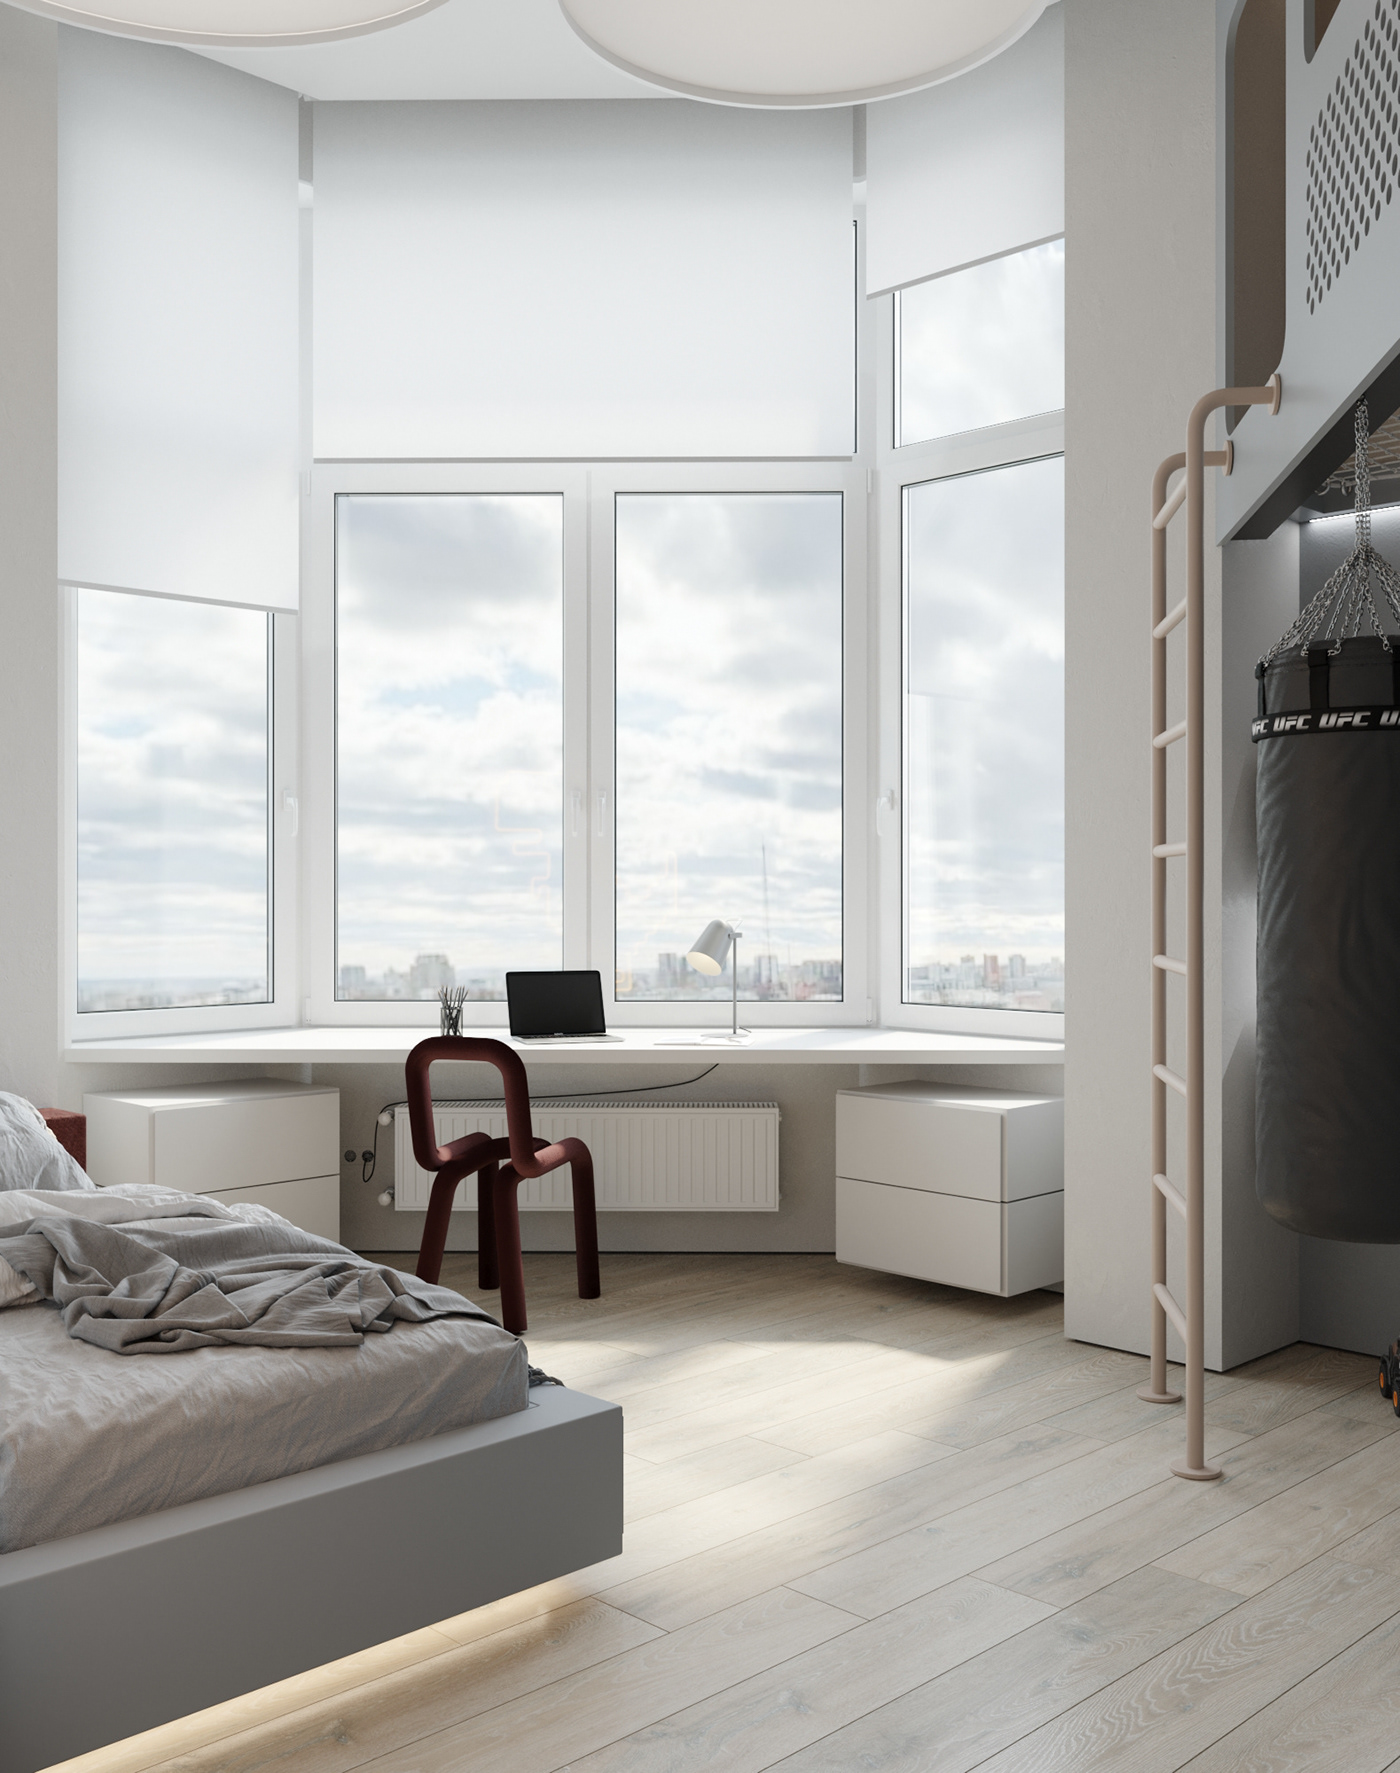 3dsmax bathroom bedroom corona render  design interior Interior living room modern modern interior visualisation